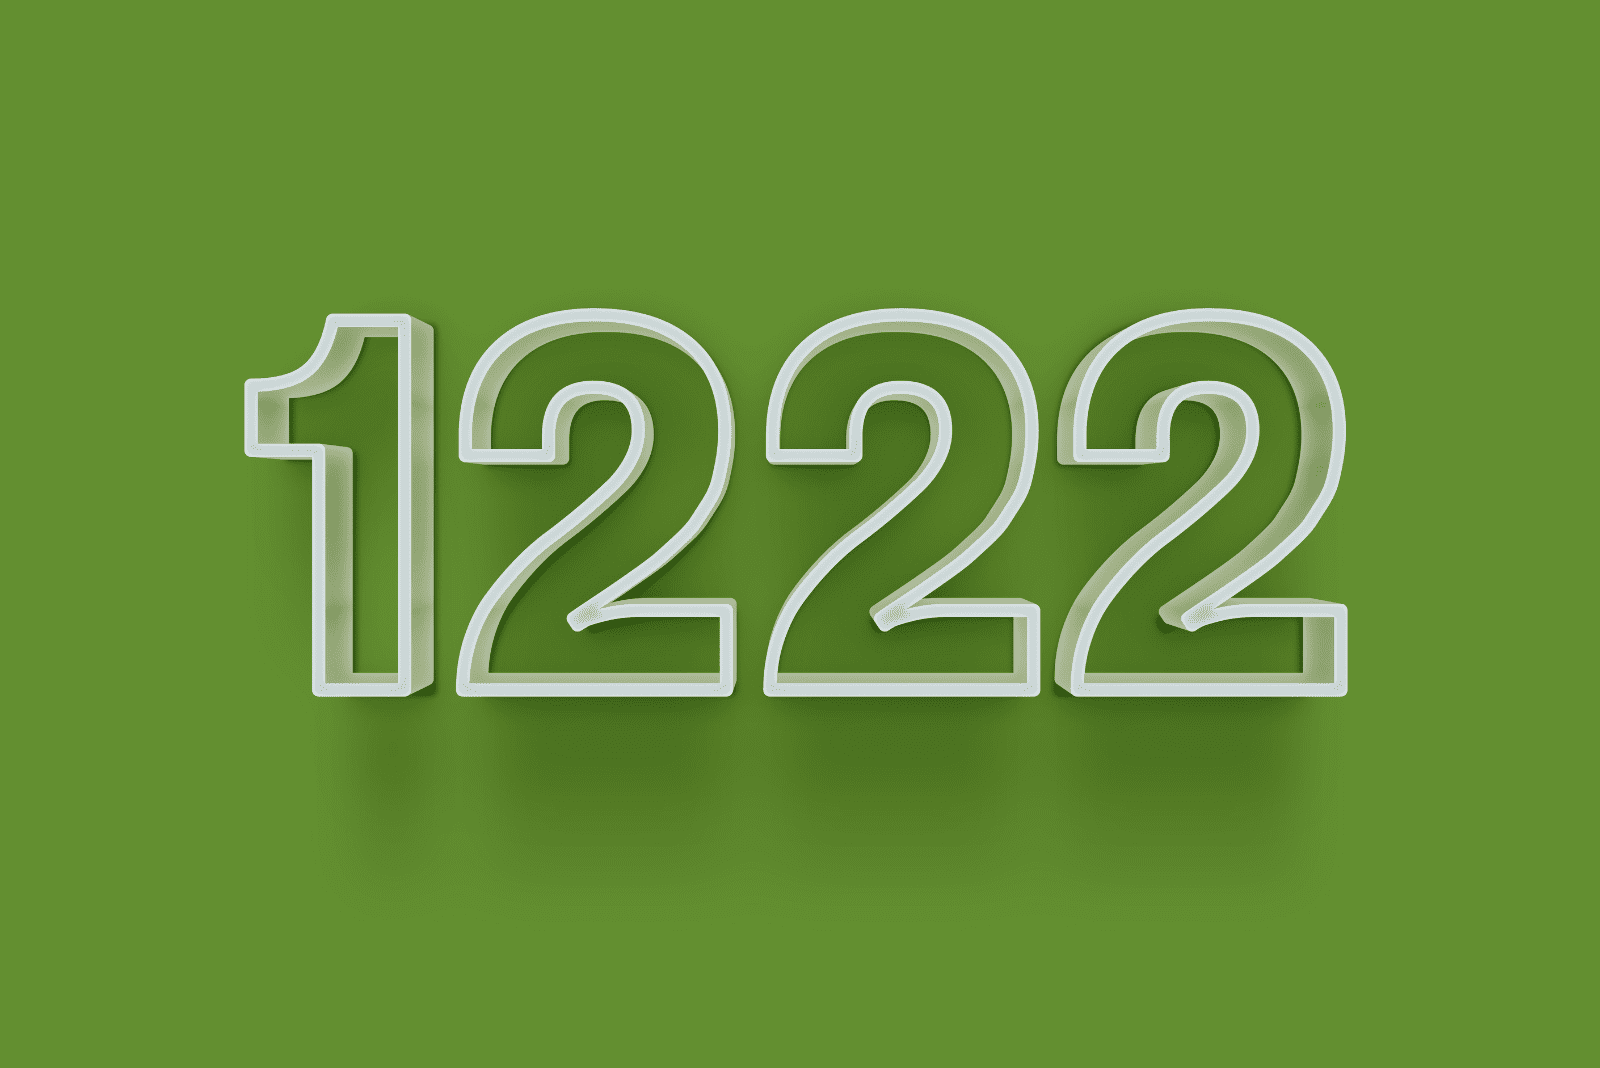 numéro 1222 sur fond vert